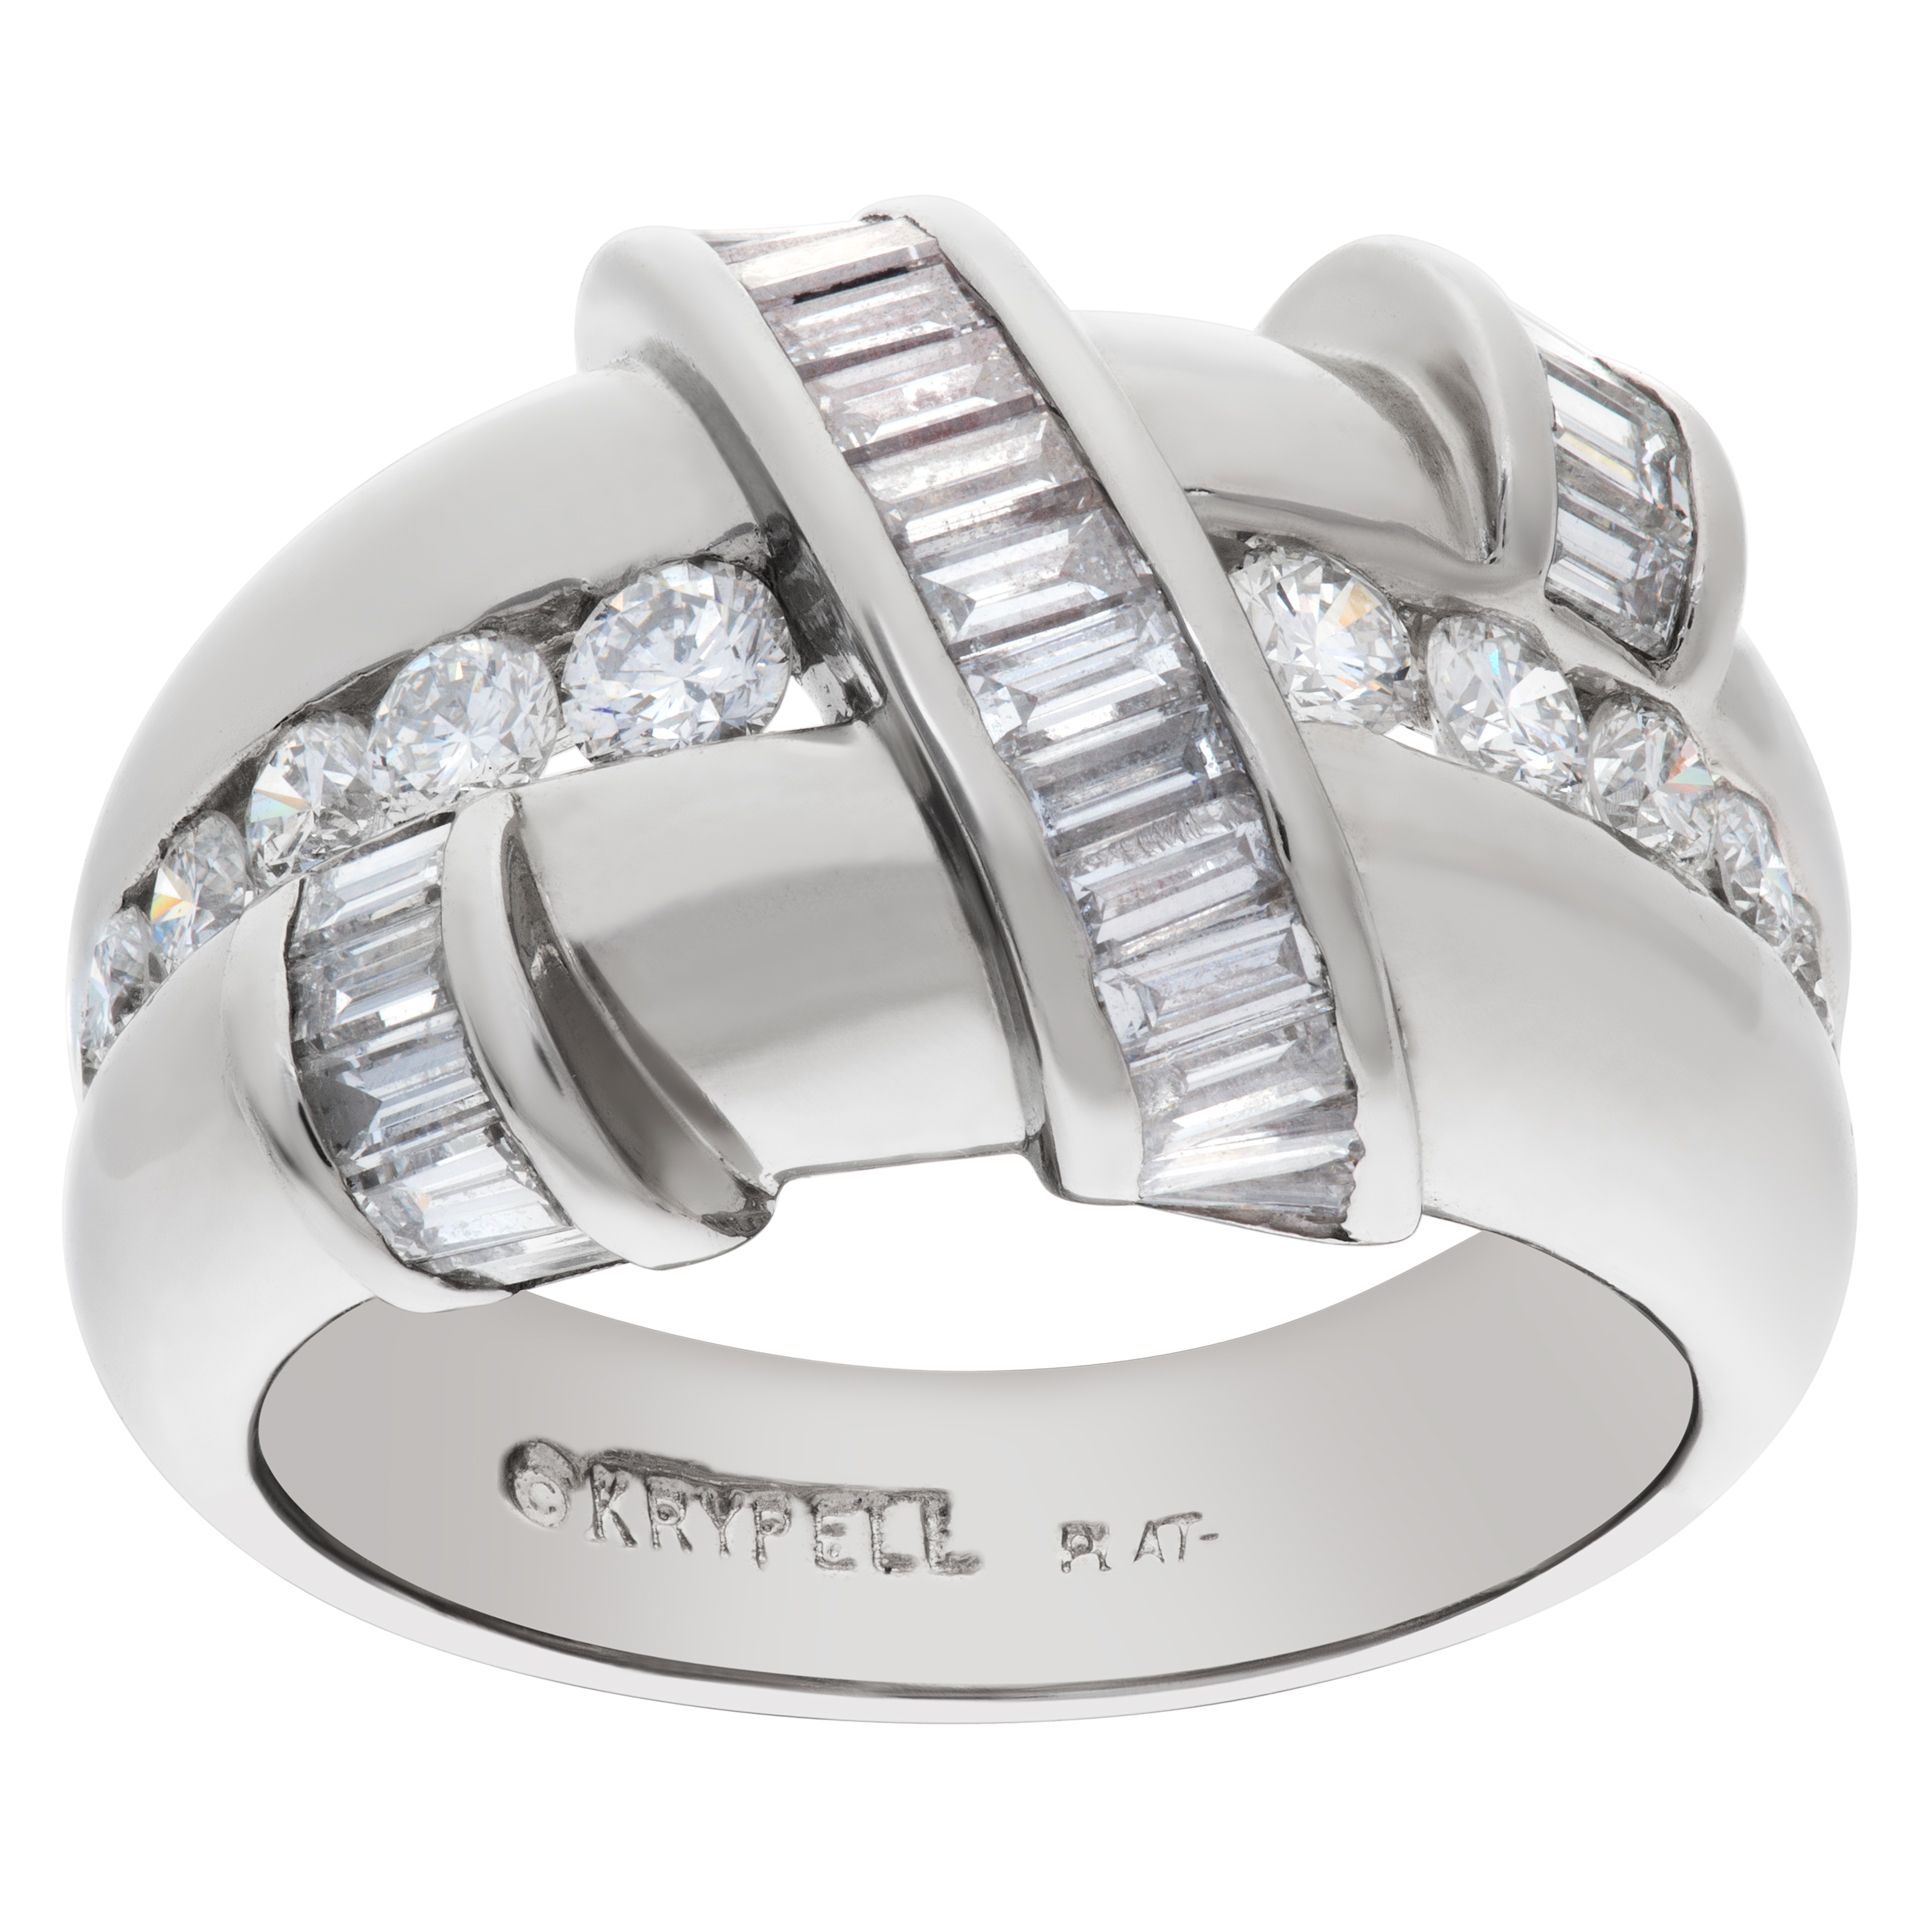 Charles Krypell diamond ring in platinum. 1.00 ct in round & baguette diamonds. image 1